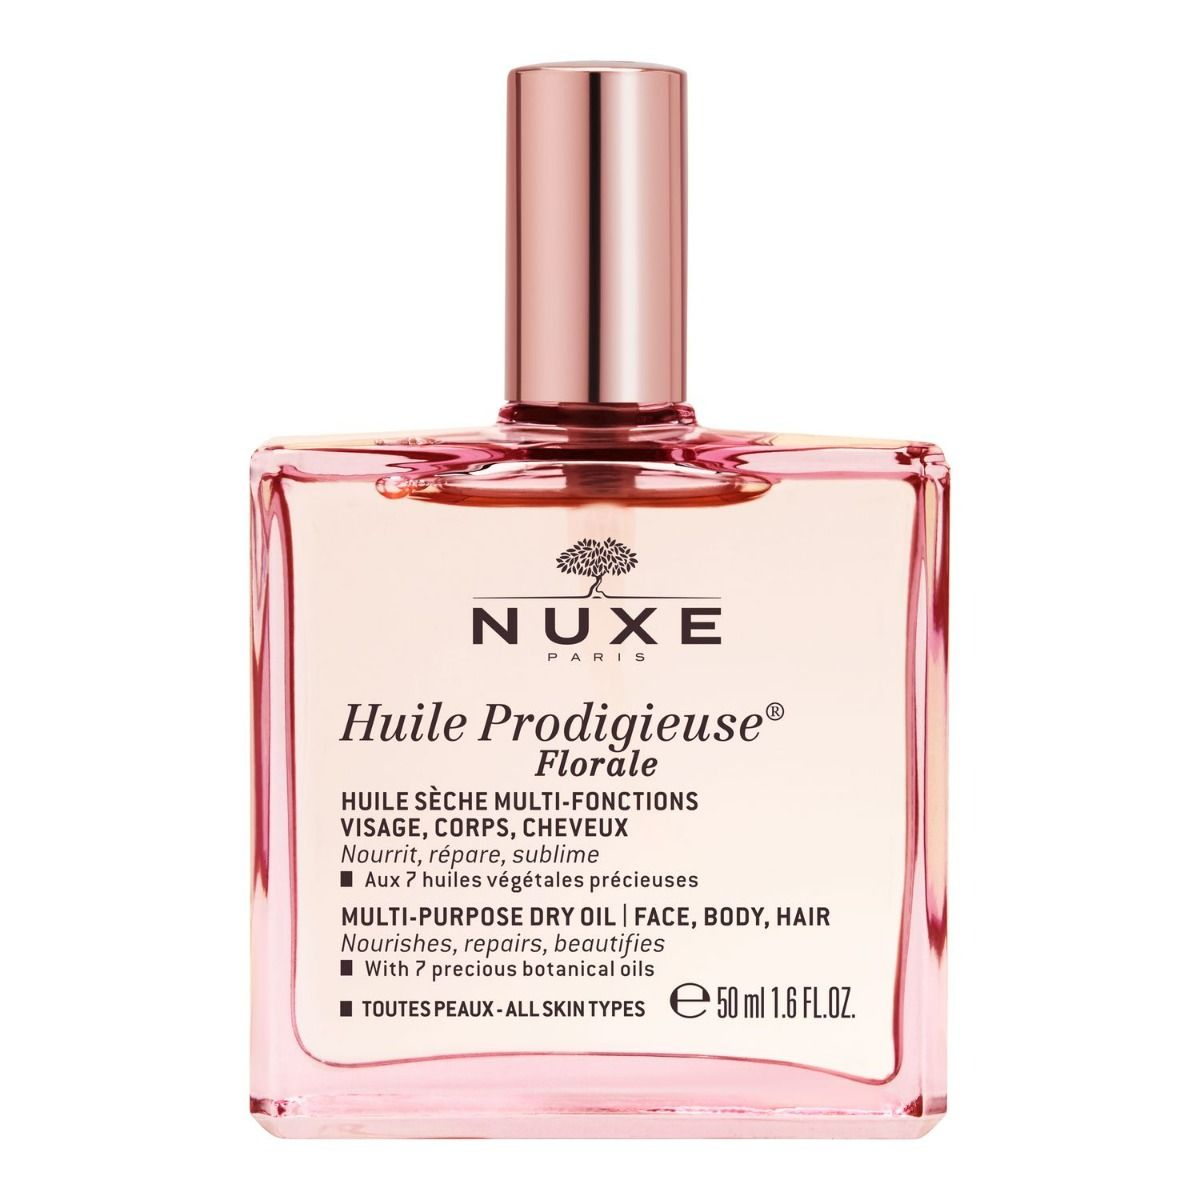 цена Nuxe Huile Prodigieuse Florale масло для лица, тела и волос, 50 ml